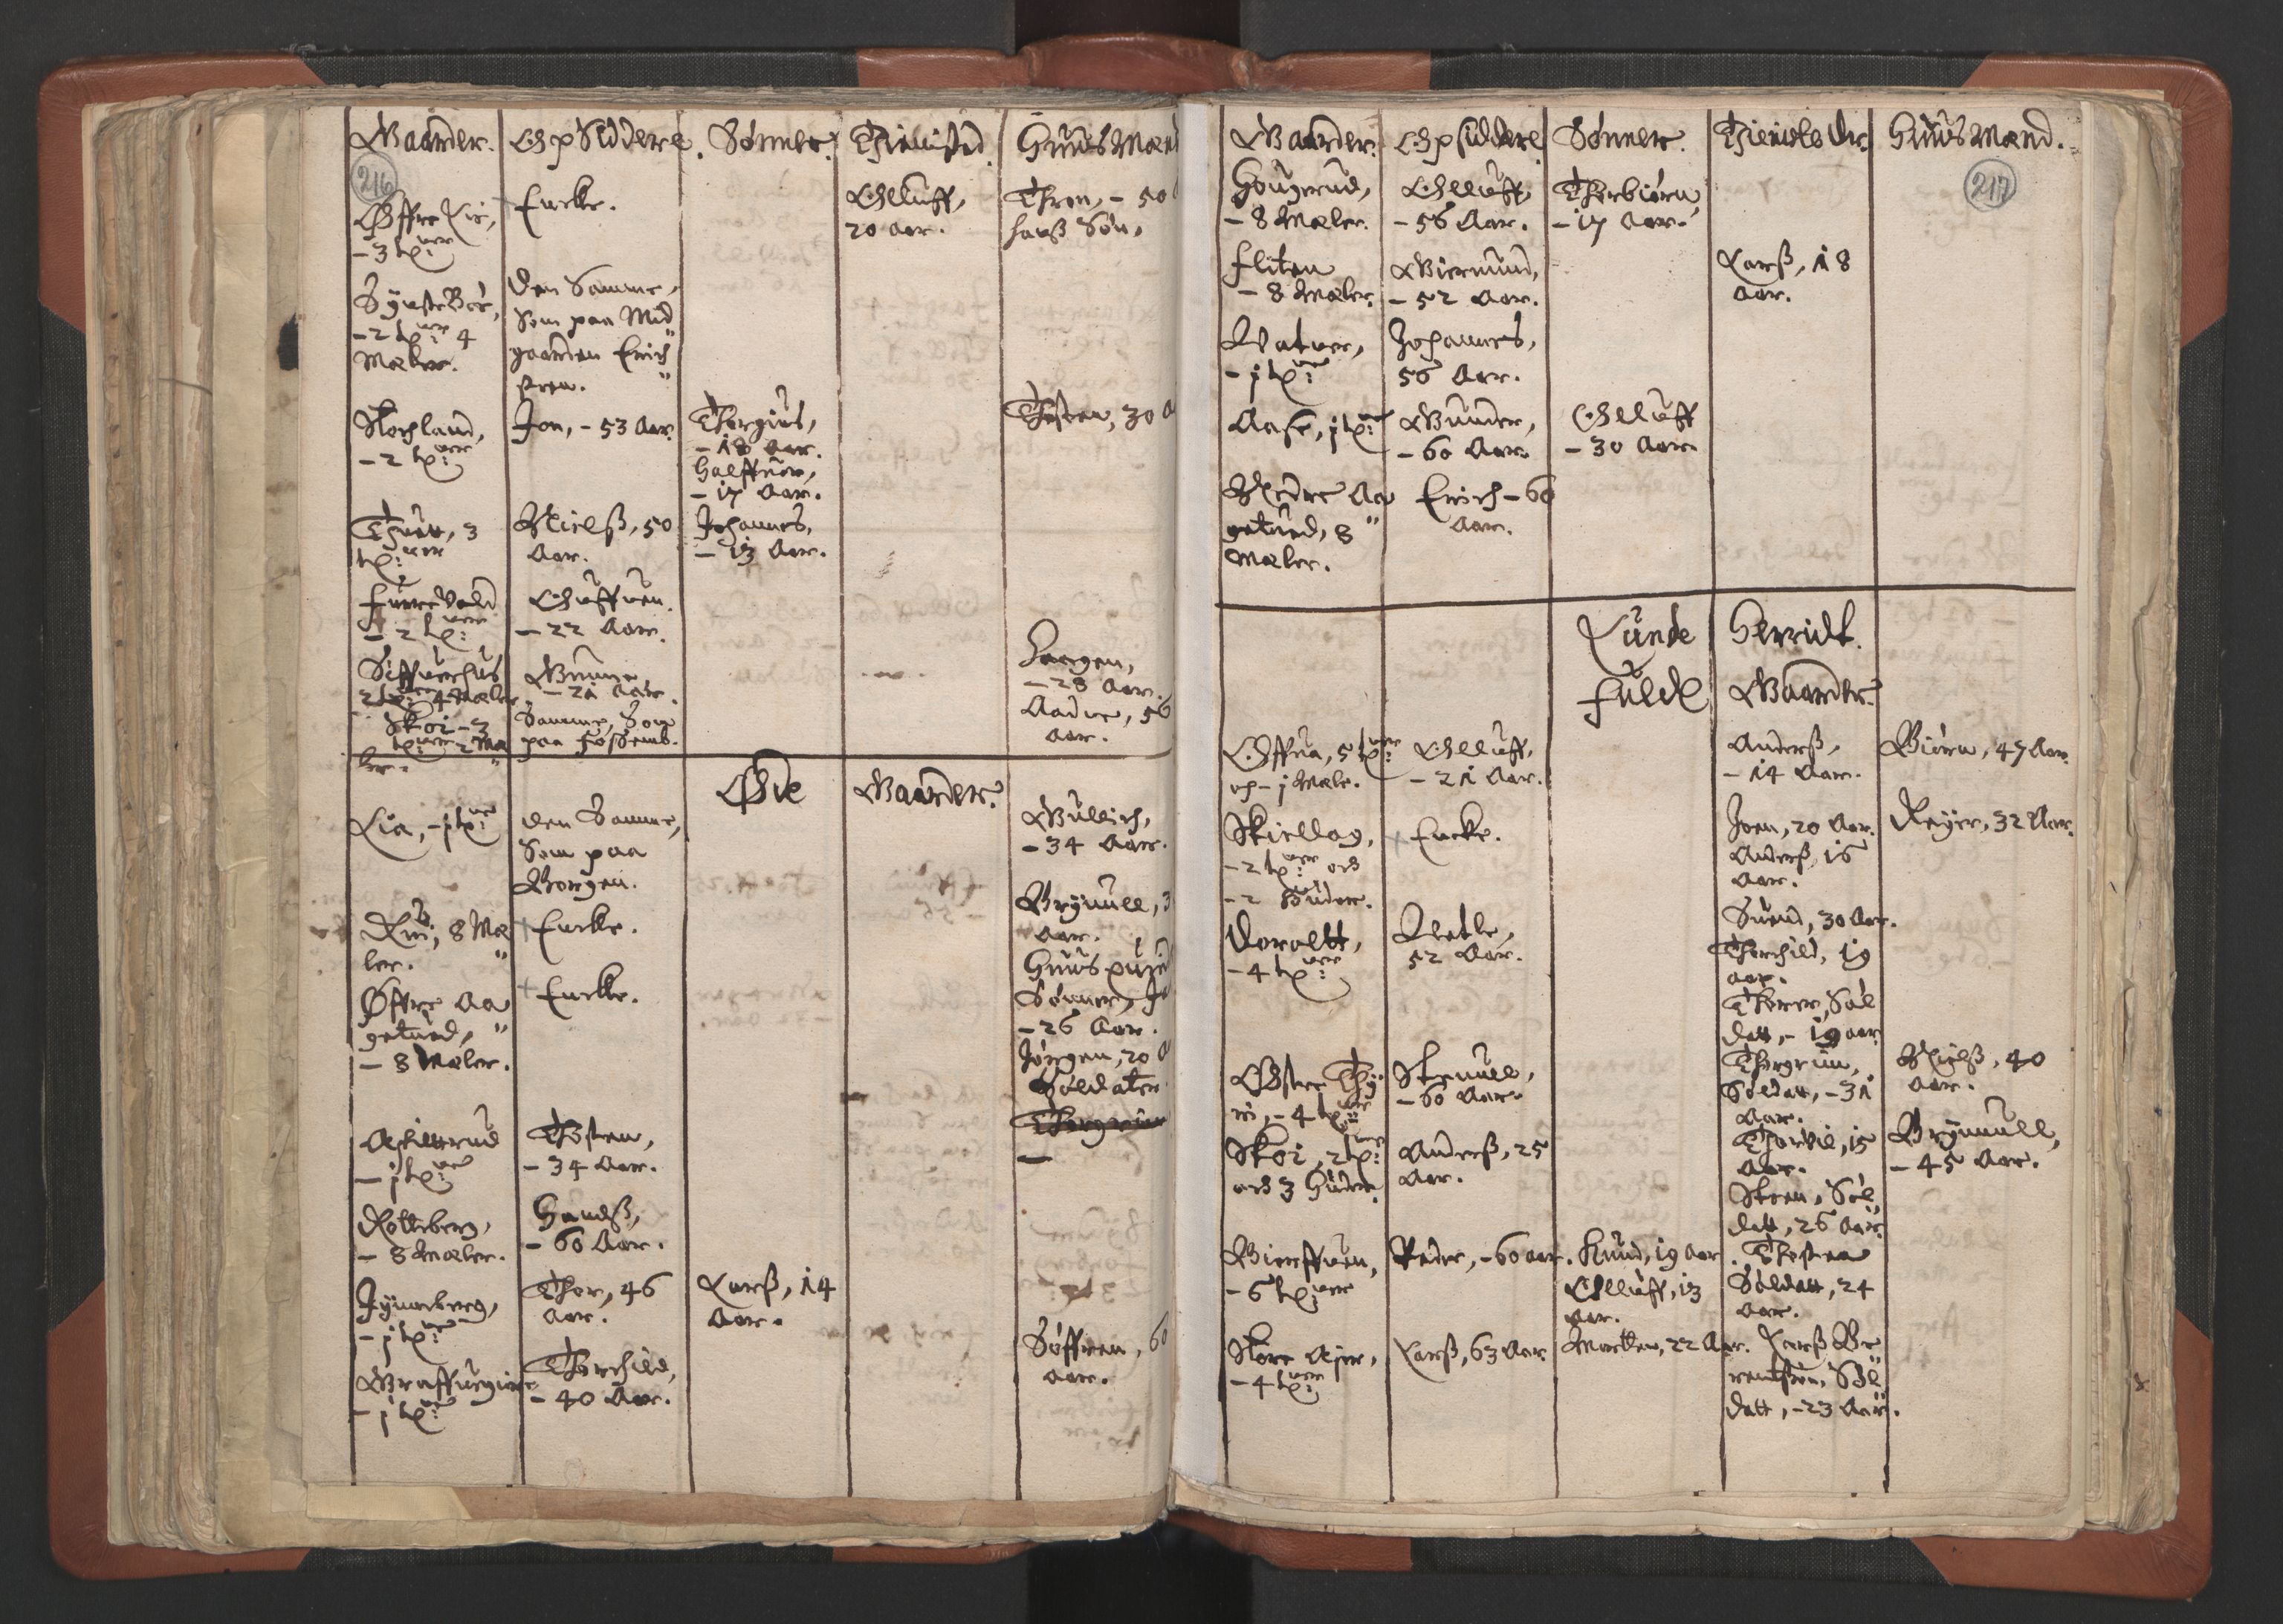 RA, Vicar's Census 1664-1666, no. 12: Øvre Telemark deanery, Nedre Telemark deanery and Bamble deanery, 1664-1666, p. 216-217